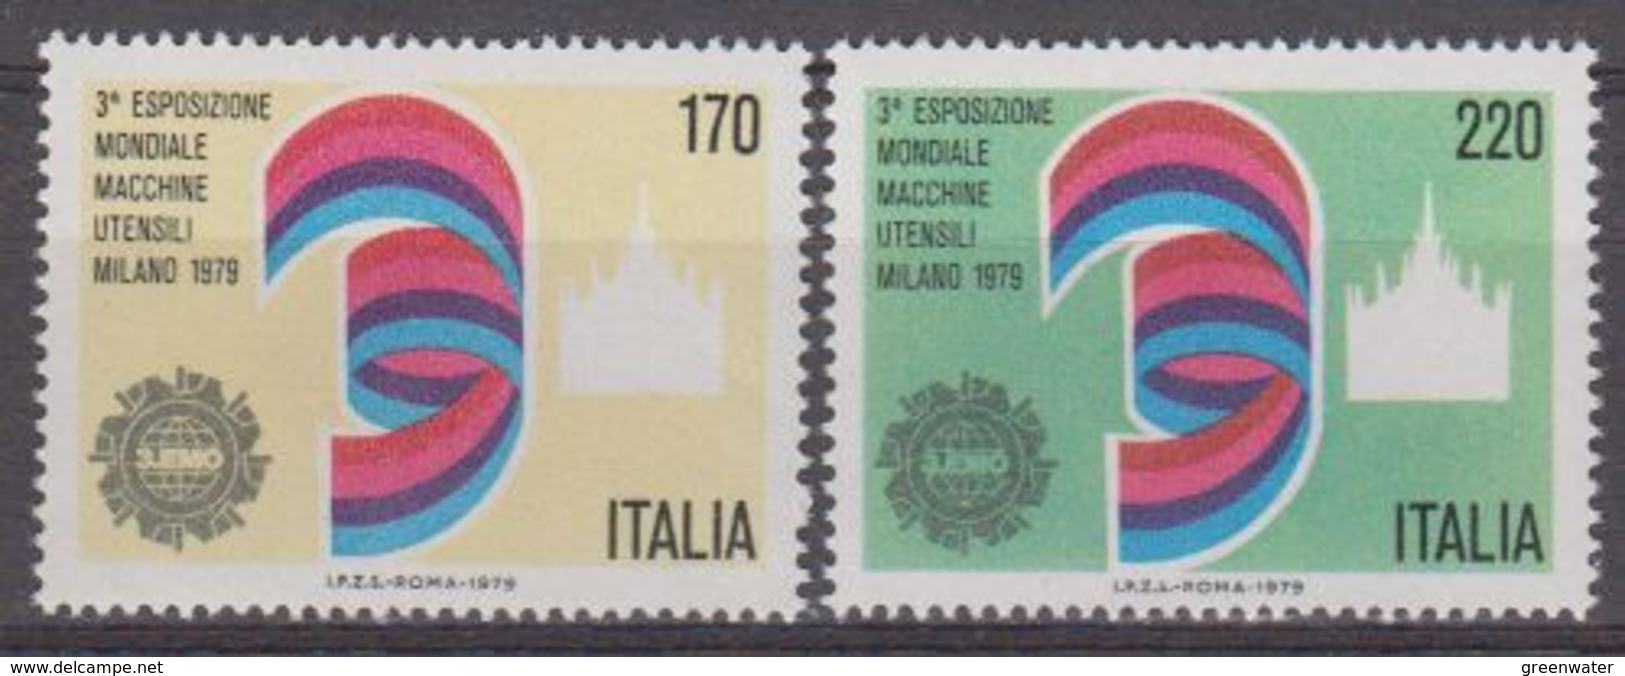 Italy 1979  Exp. Mondiale Macchine  Utensili 2v ** Mnh (42488A) - 1971-80: Nieuw/plakker